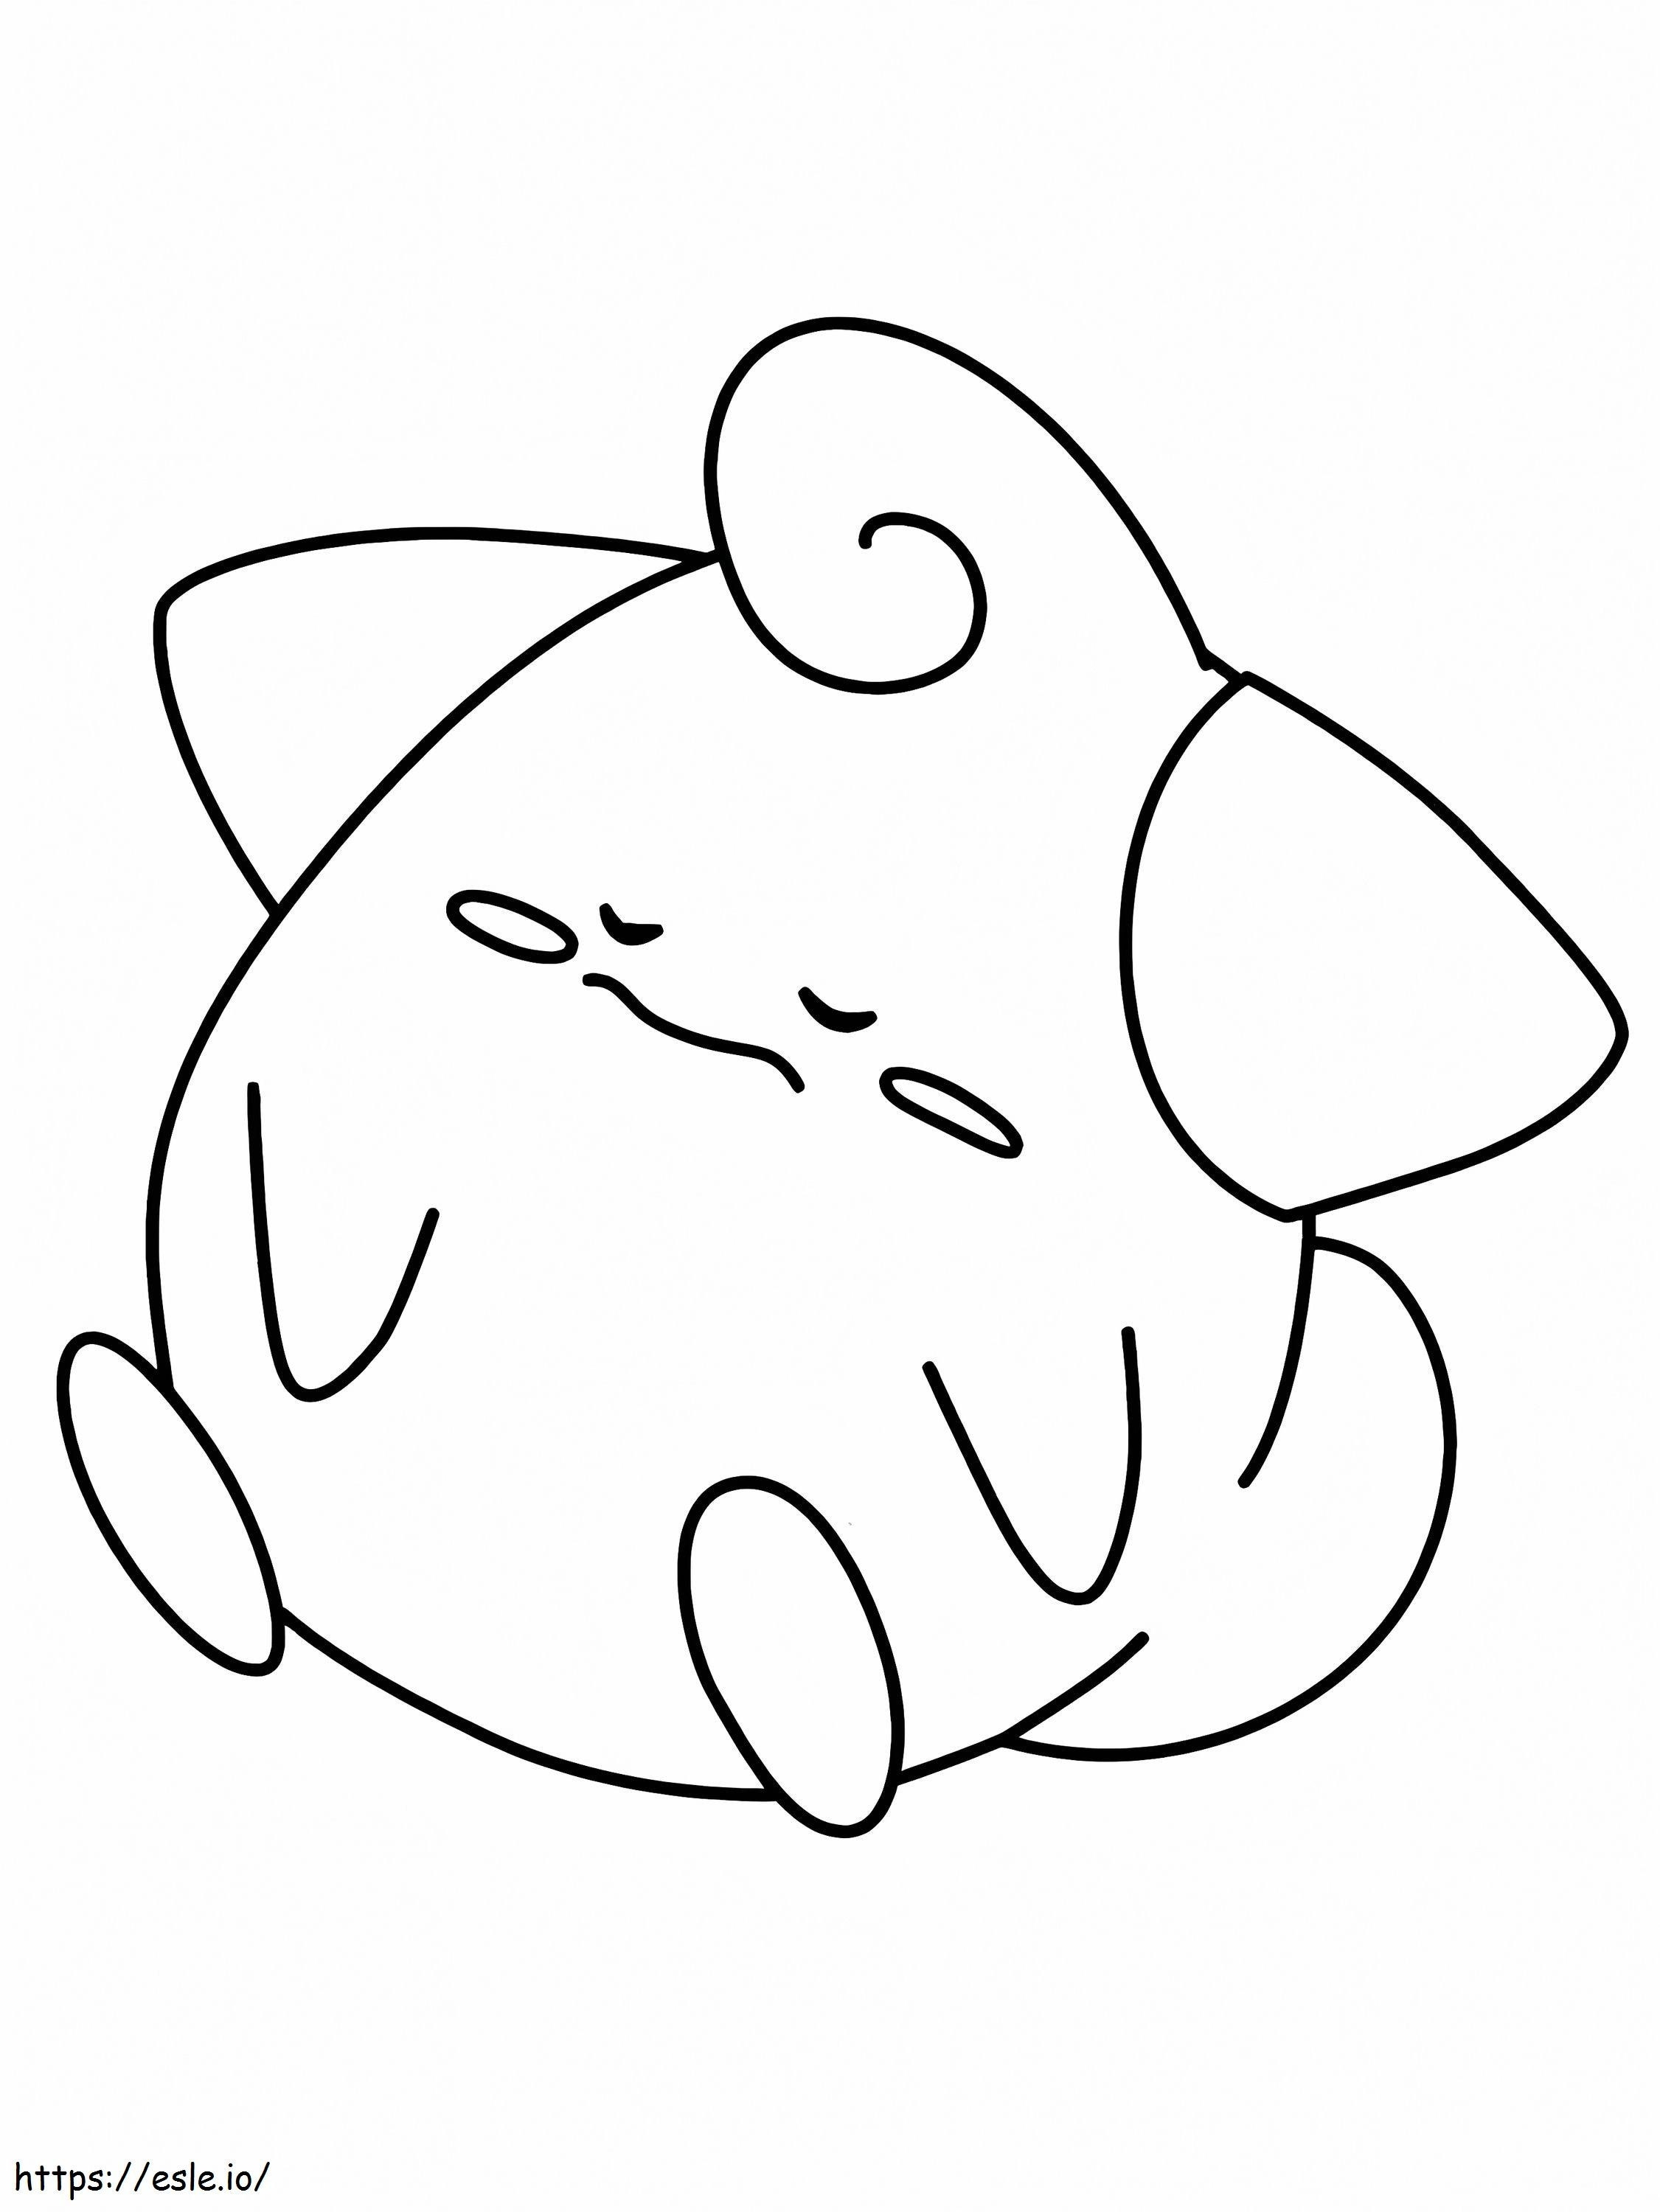 Printable Cleffa Pokemon coloring page